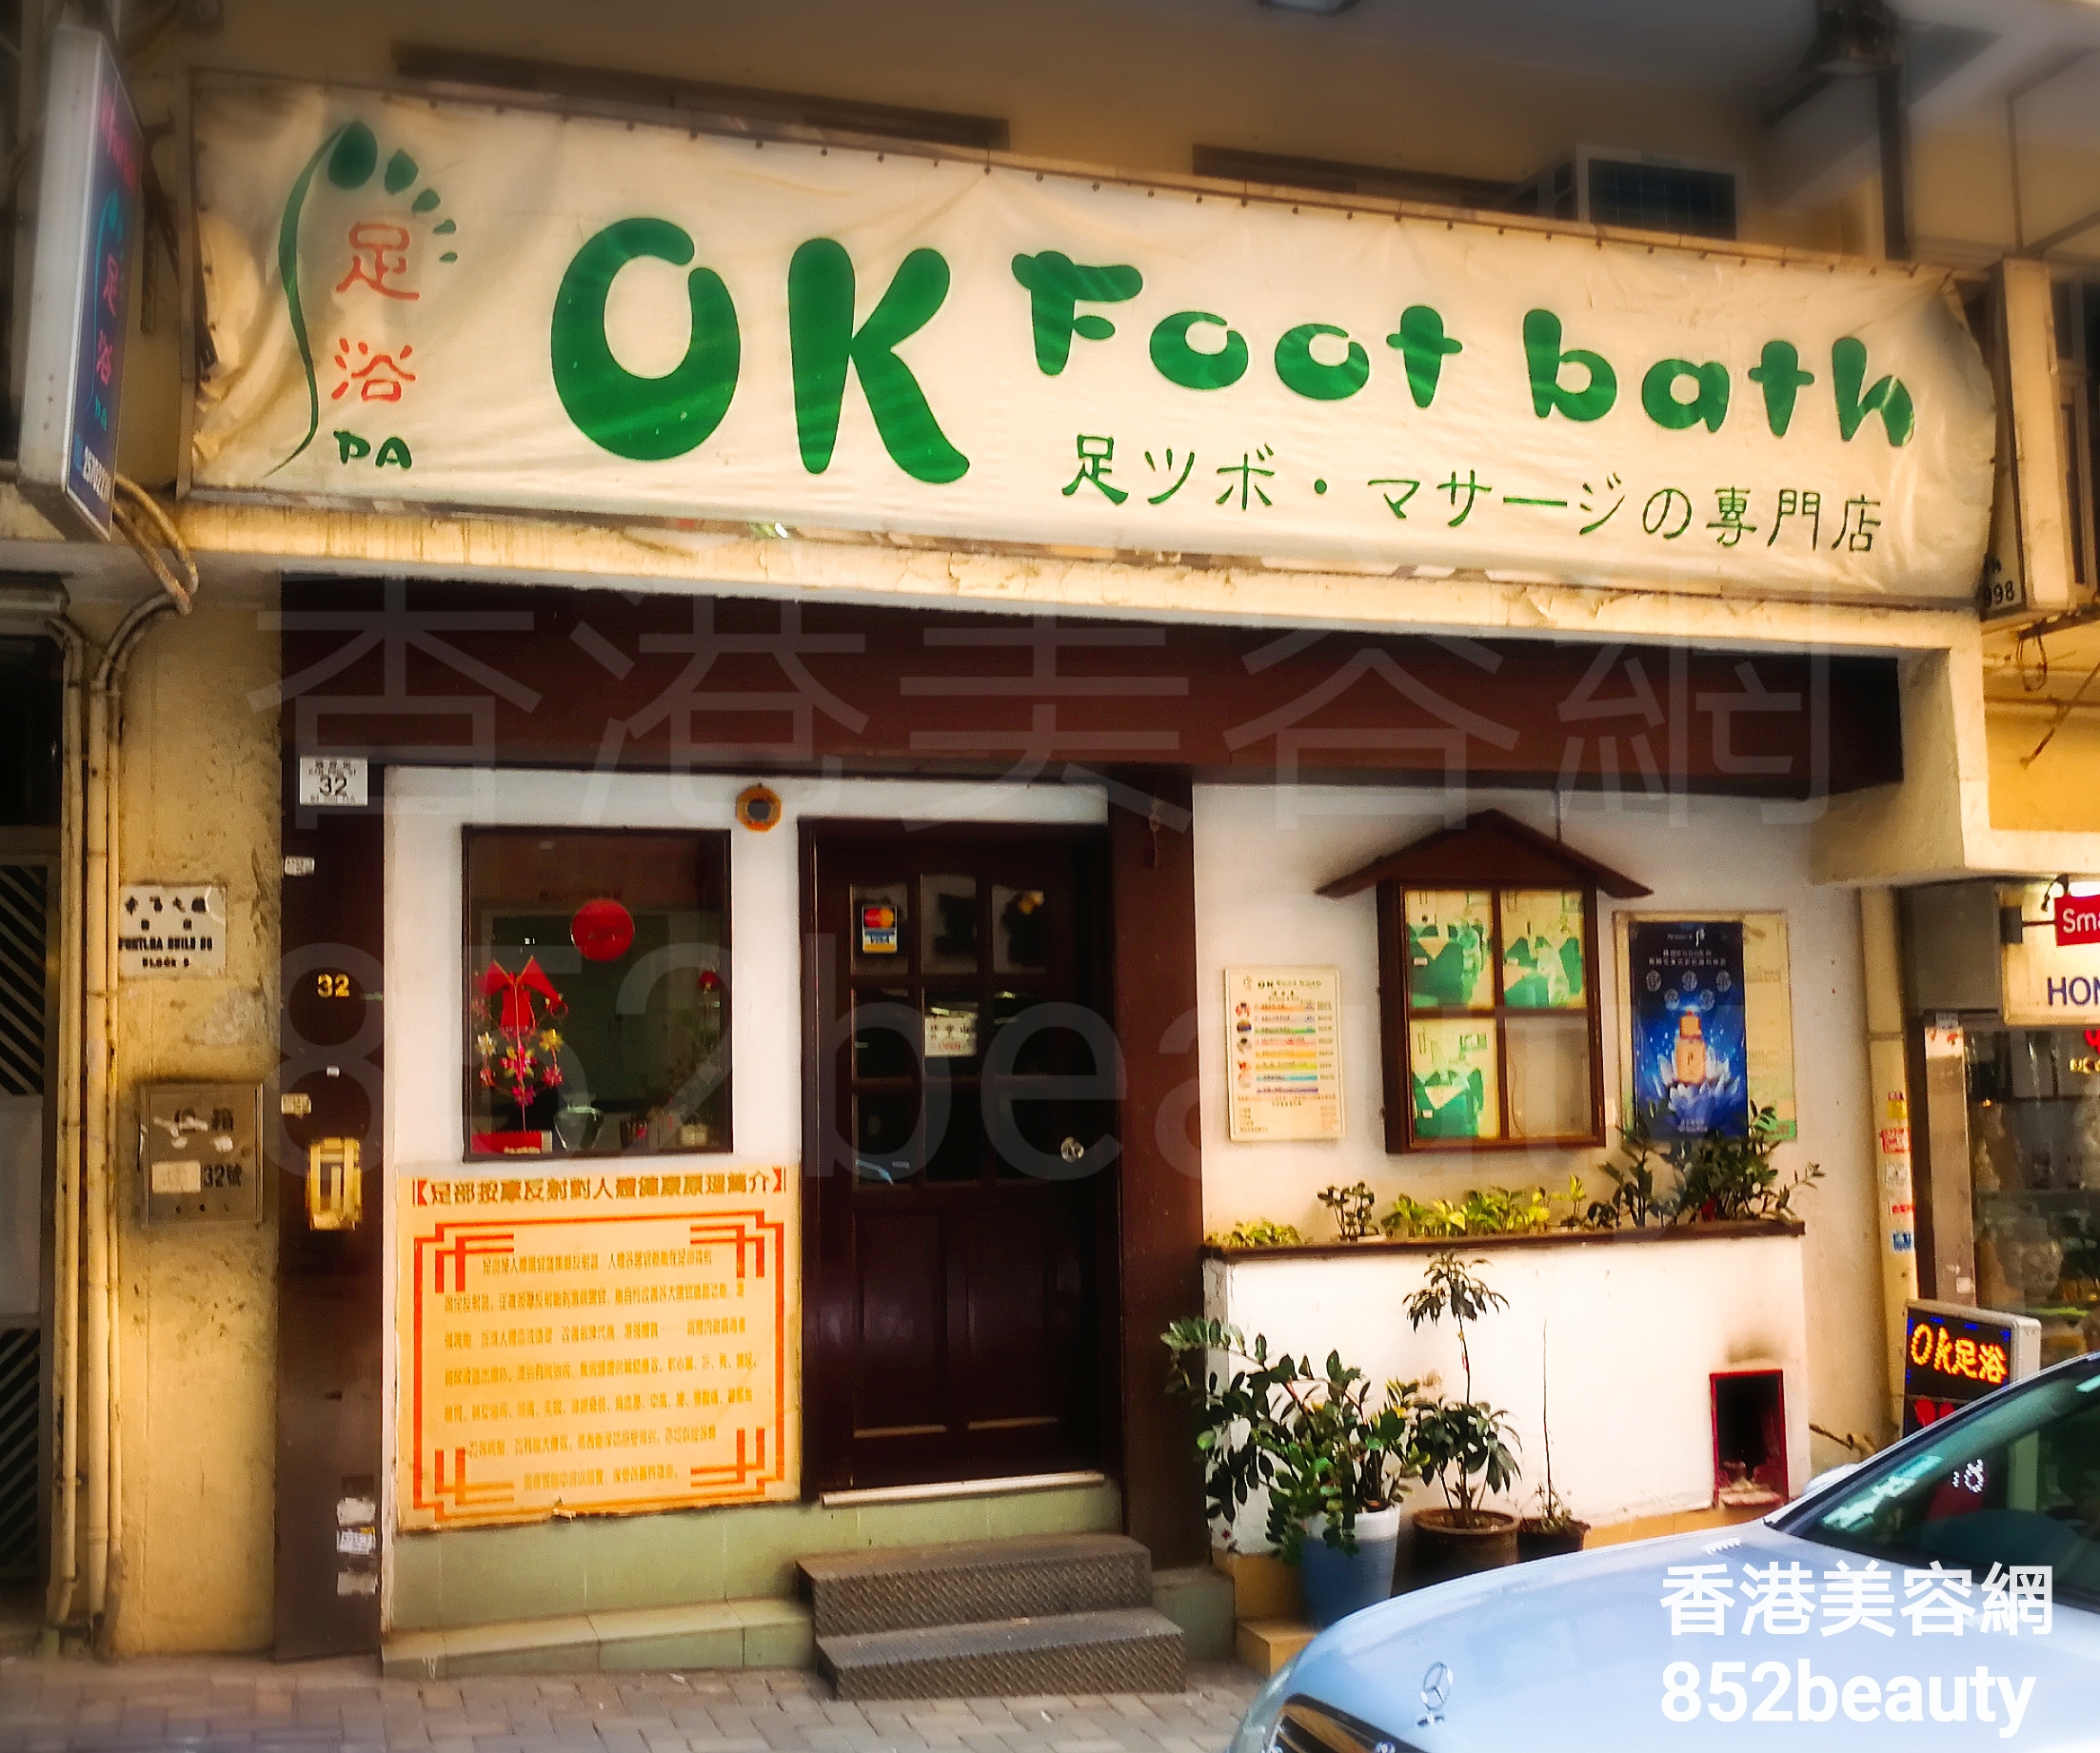 Massage/SPA: OK Foot bath